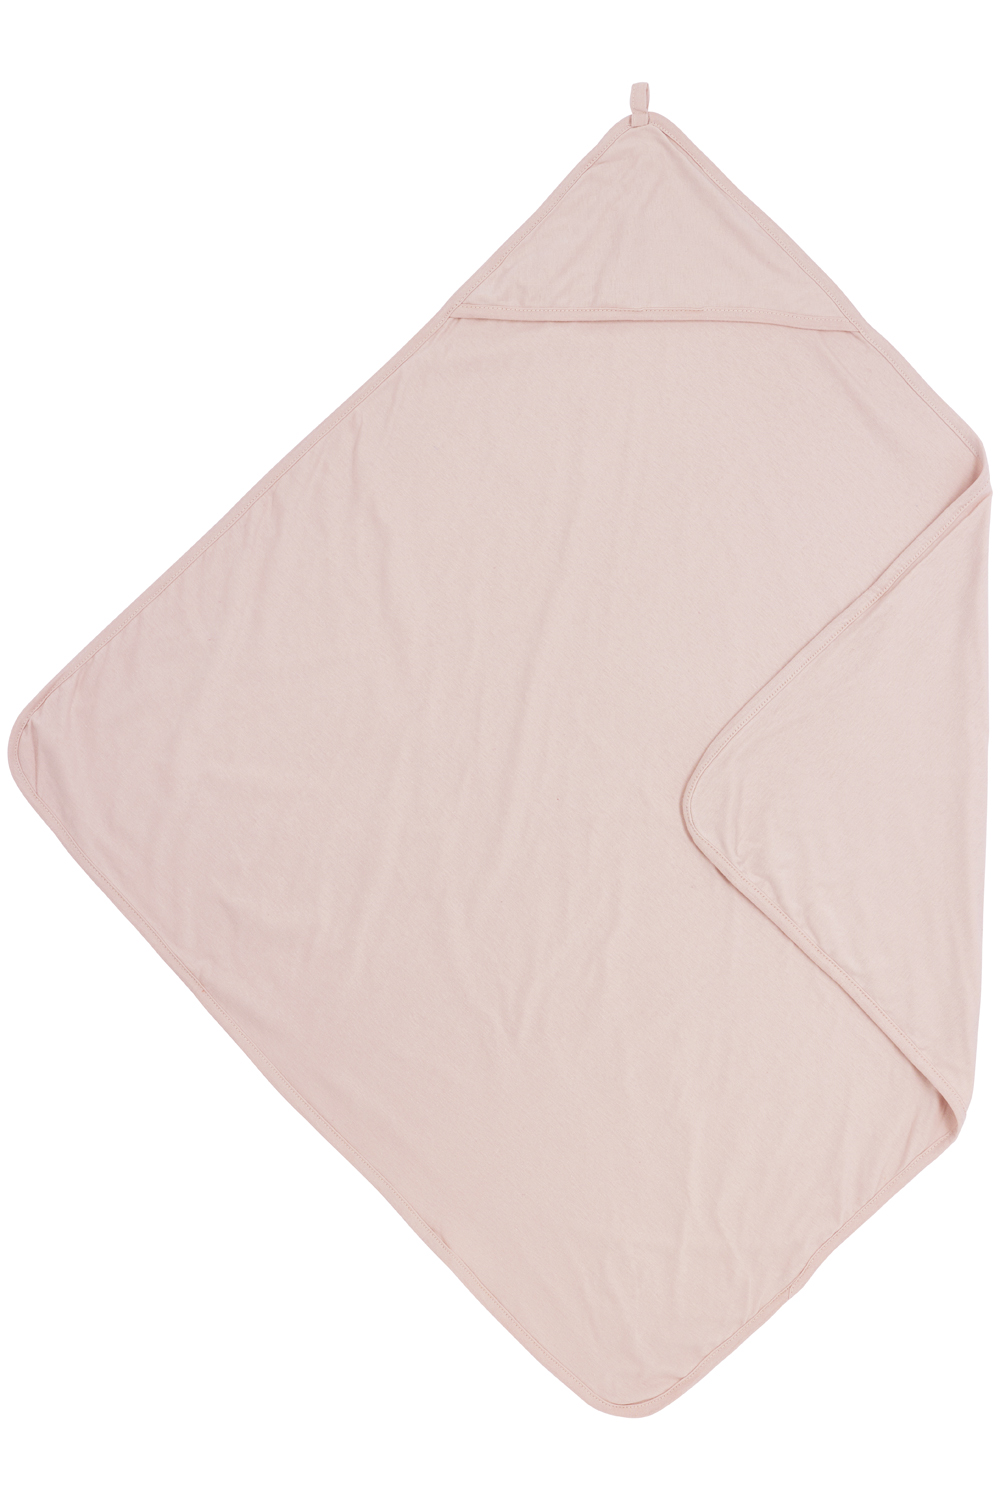 Kapuzentuch Uni - soft pink - 80x80cm